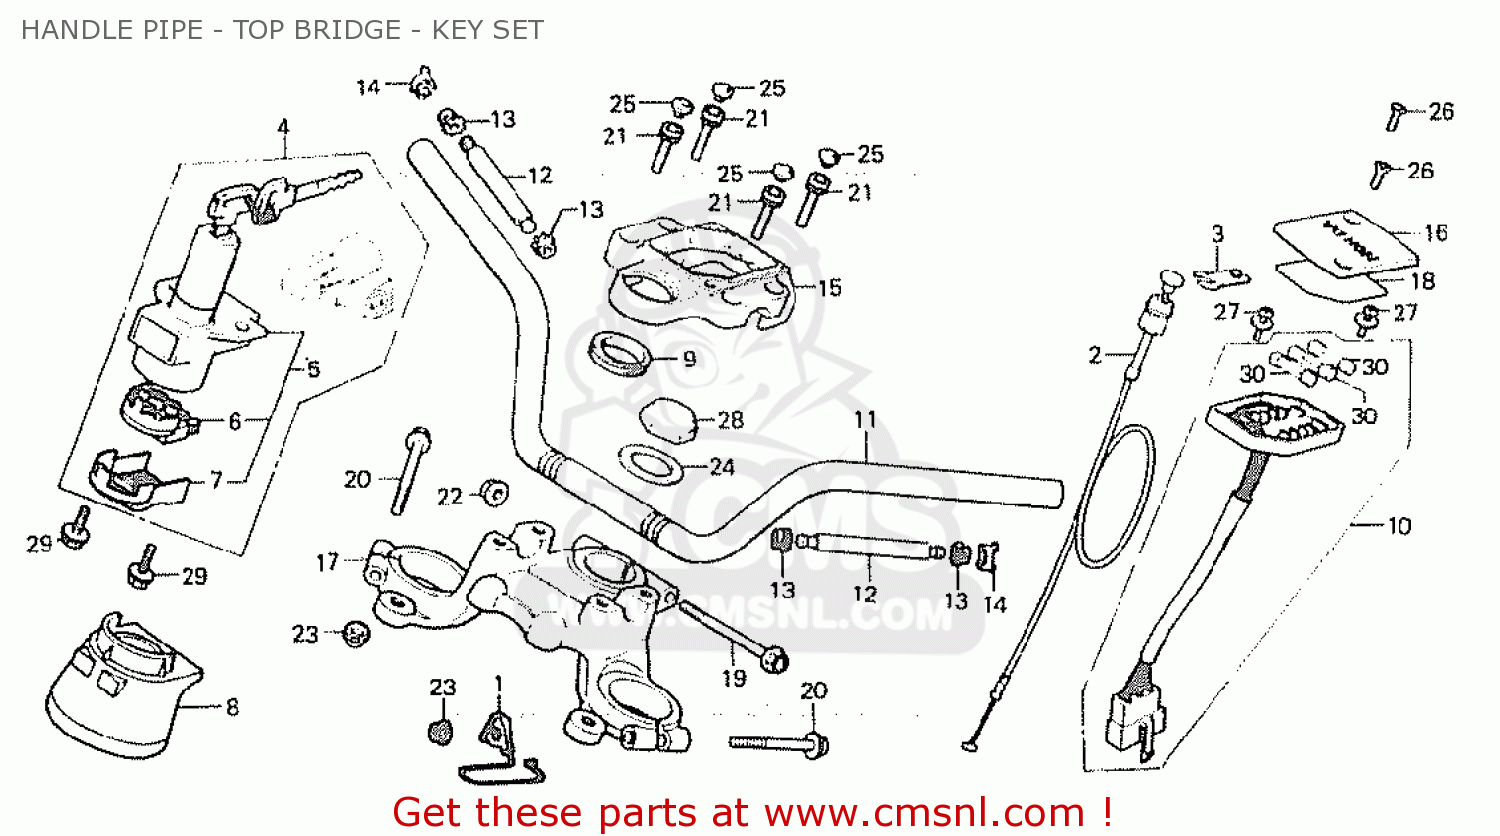 Welche Schraube ist das ? Honda-cx500c-custom-1980-agermany27ps-handle-pipe-top-bridge-key-set_bigma000152f06_27de